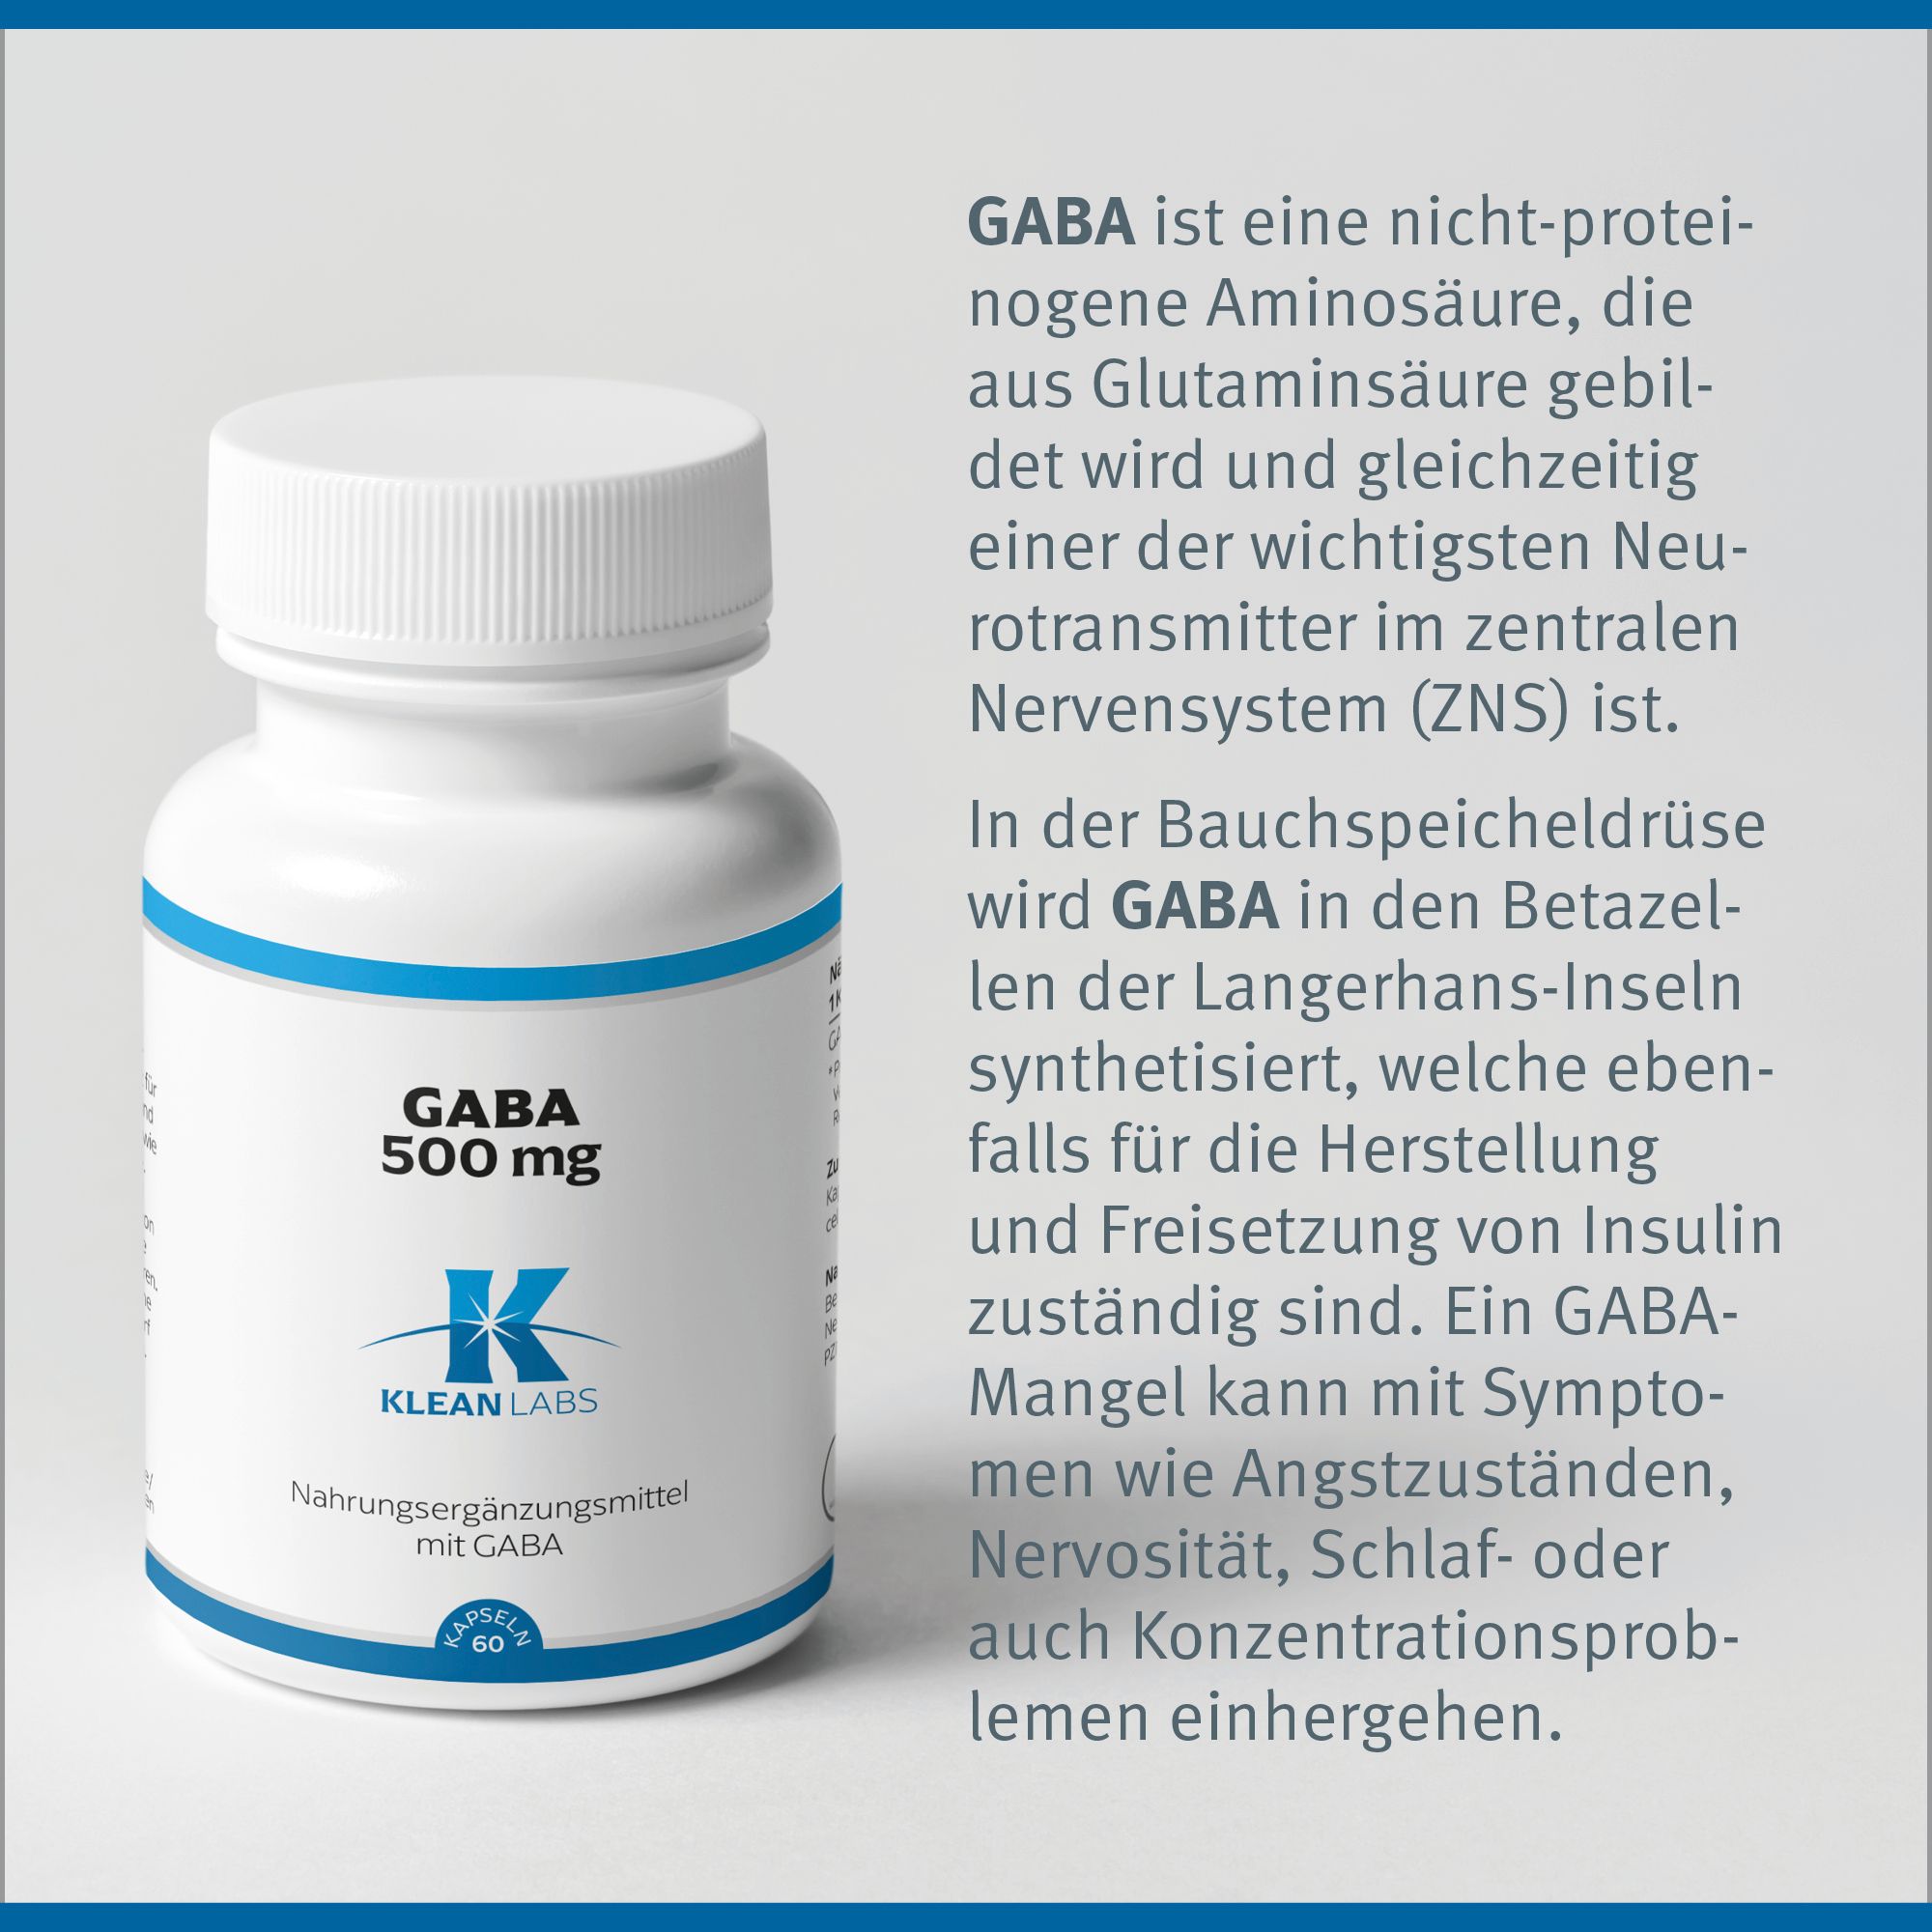 GABA 500 mg